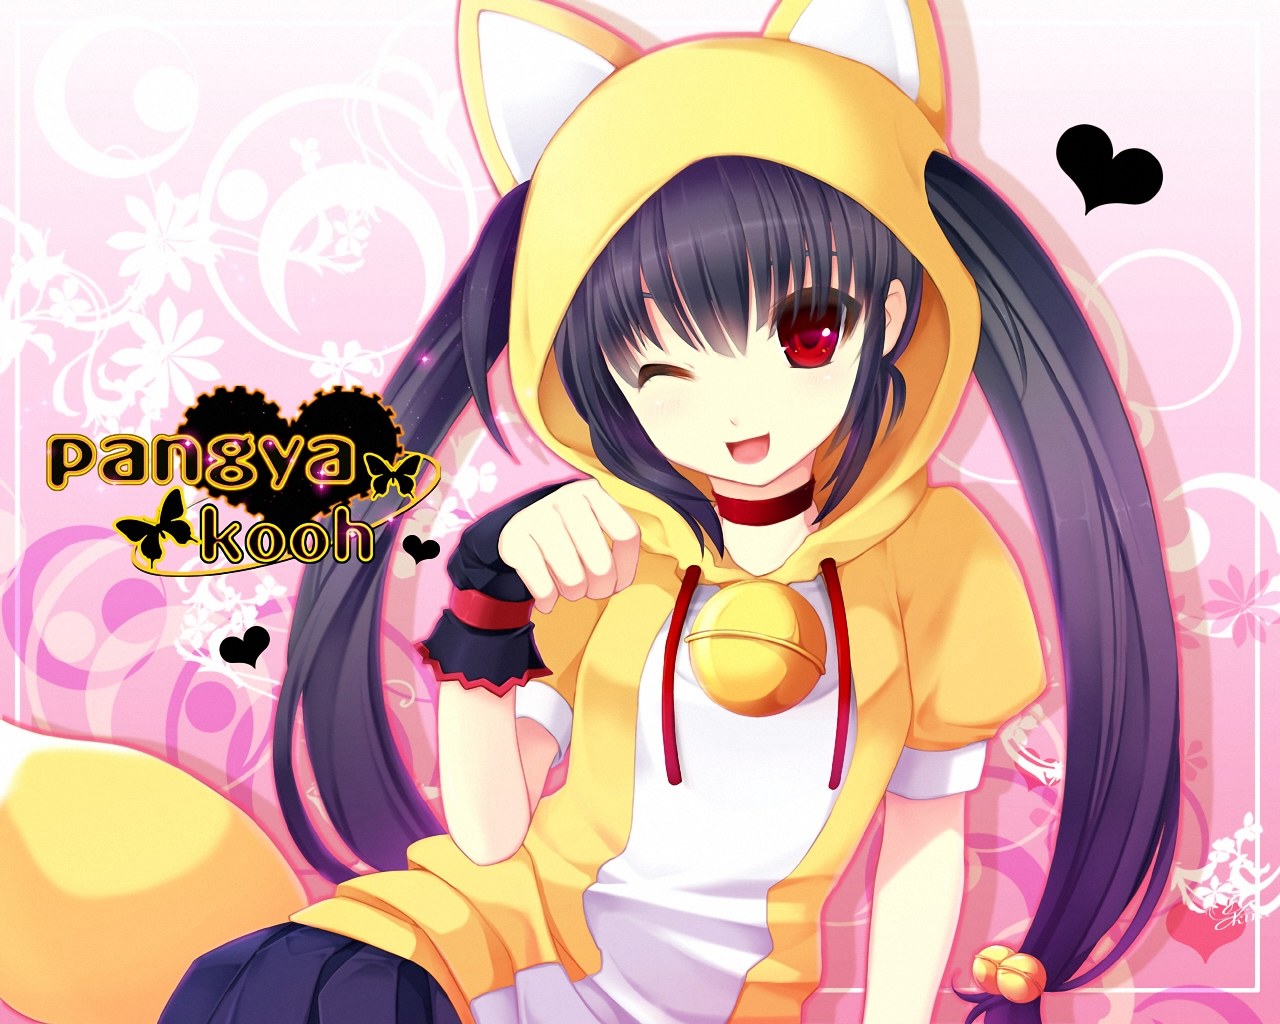 Anime Super Fan Image Neko Girl HD Wallpaper And Background Photos